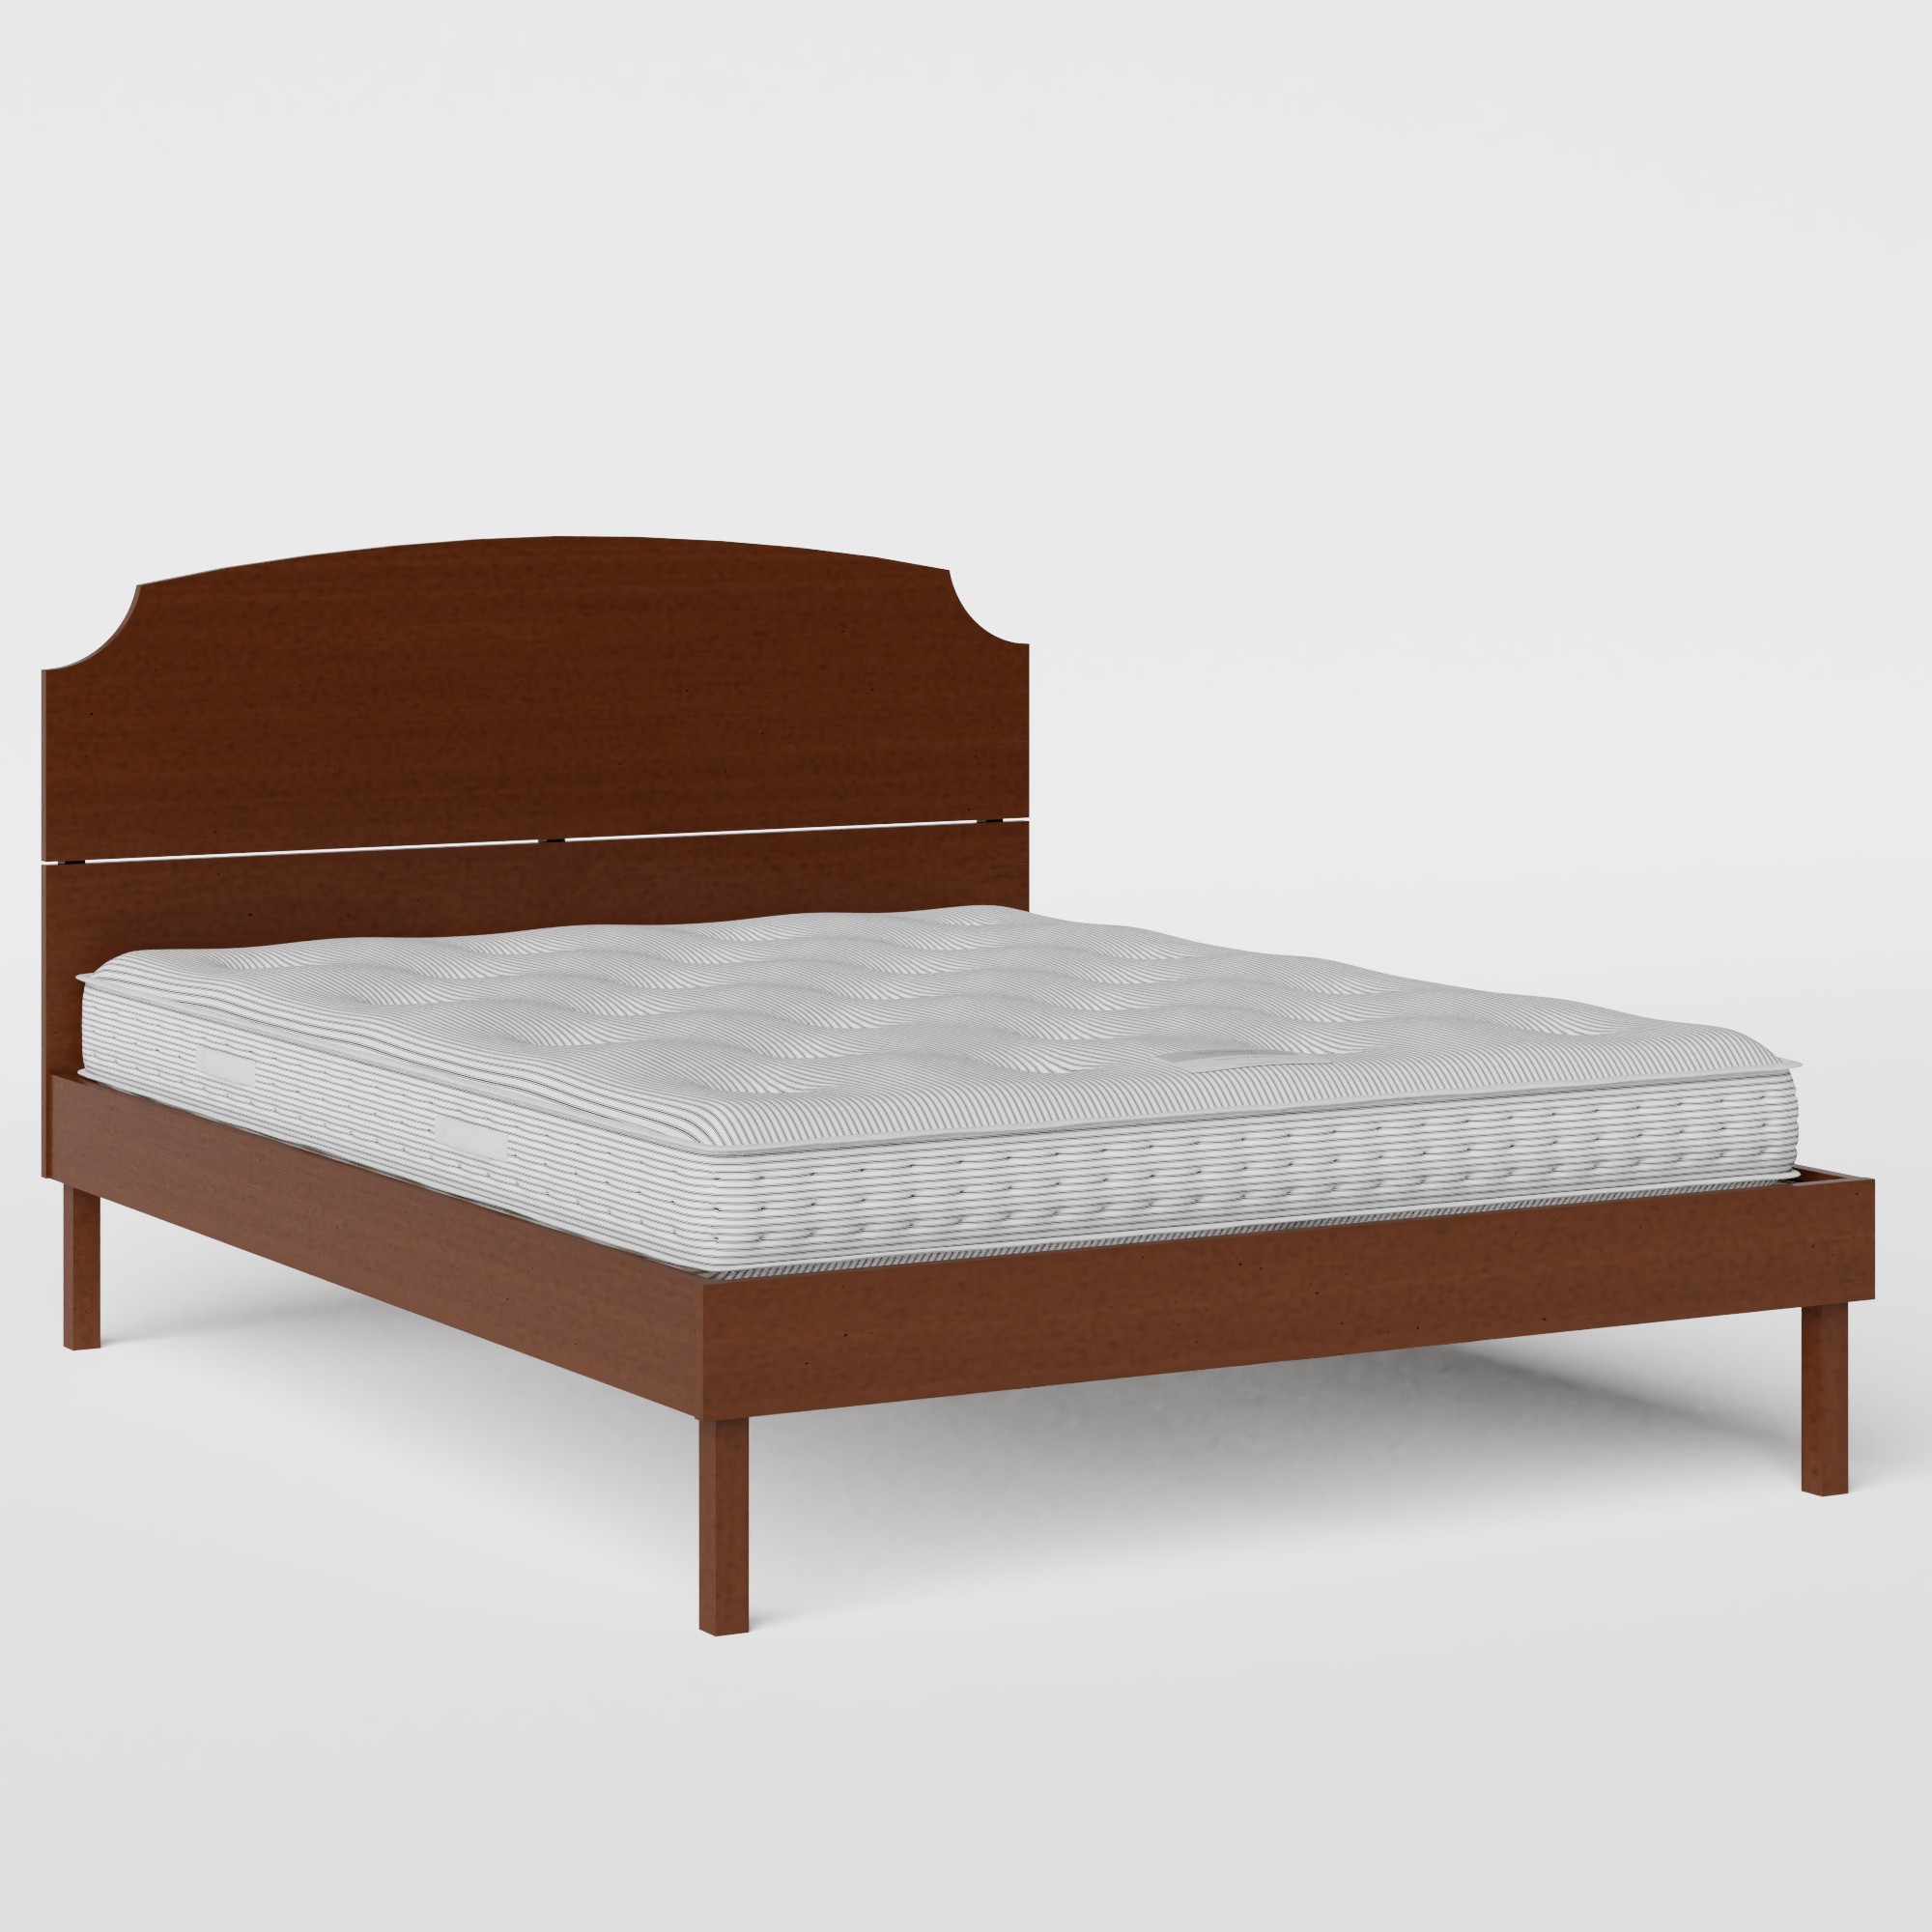 Kobe wood bed in dark cherry with Juno mattress